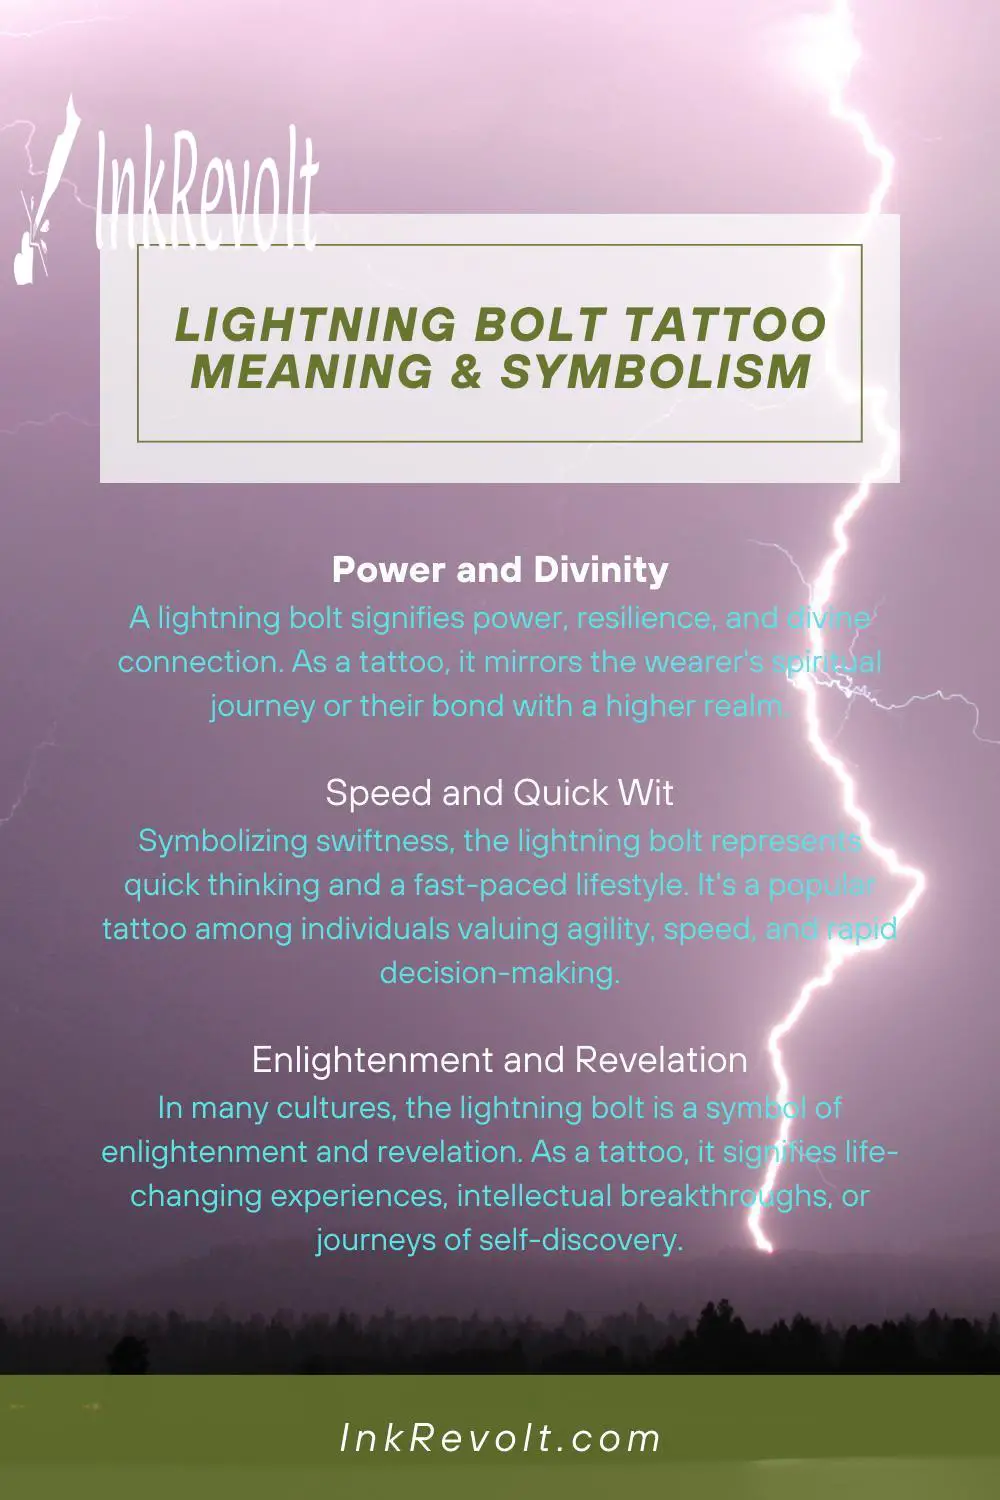 lighning bolt tattoo symbolism